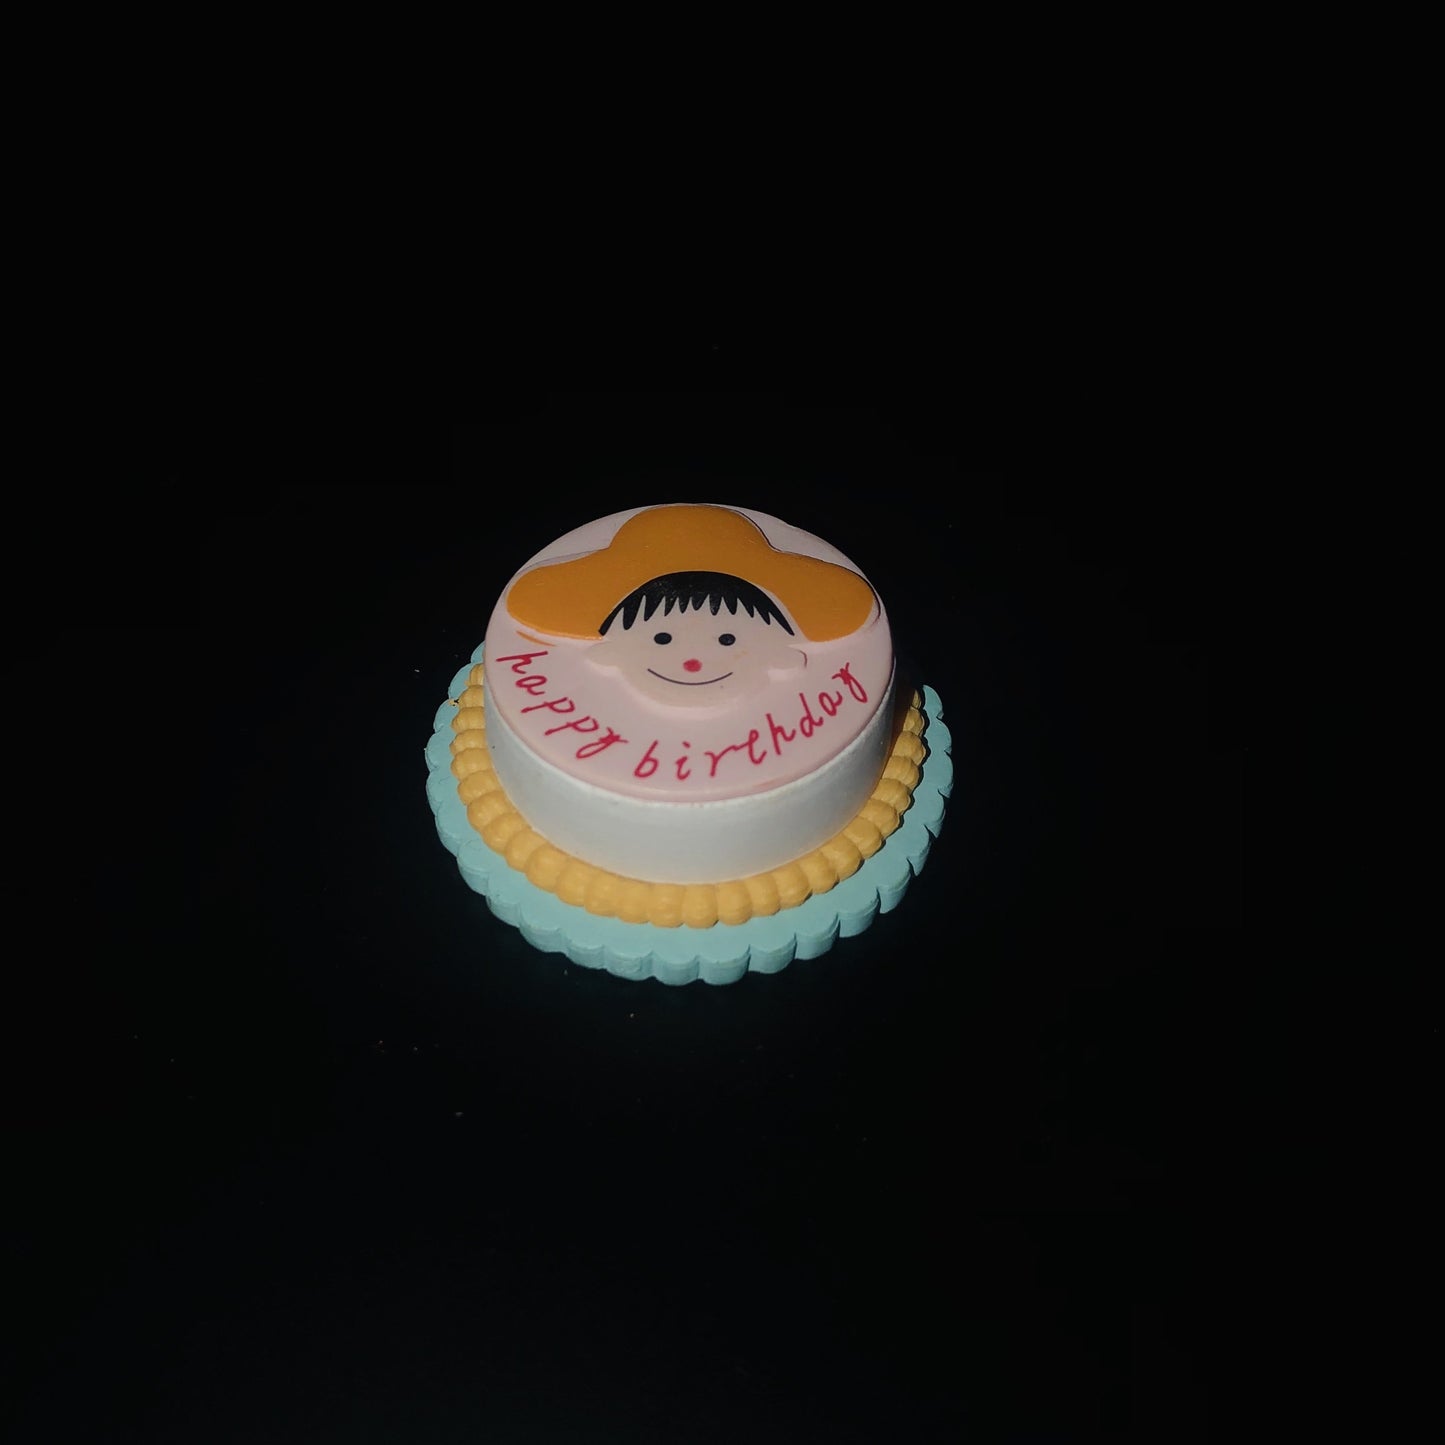 cake, pastery, celebration, congratulation, happy, birthday, anniversary